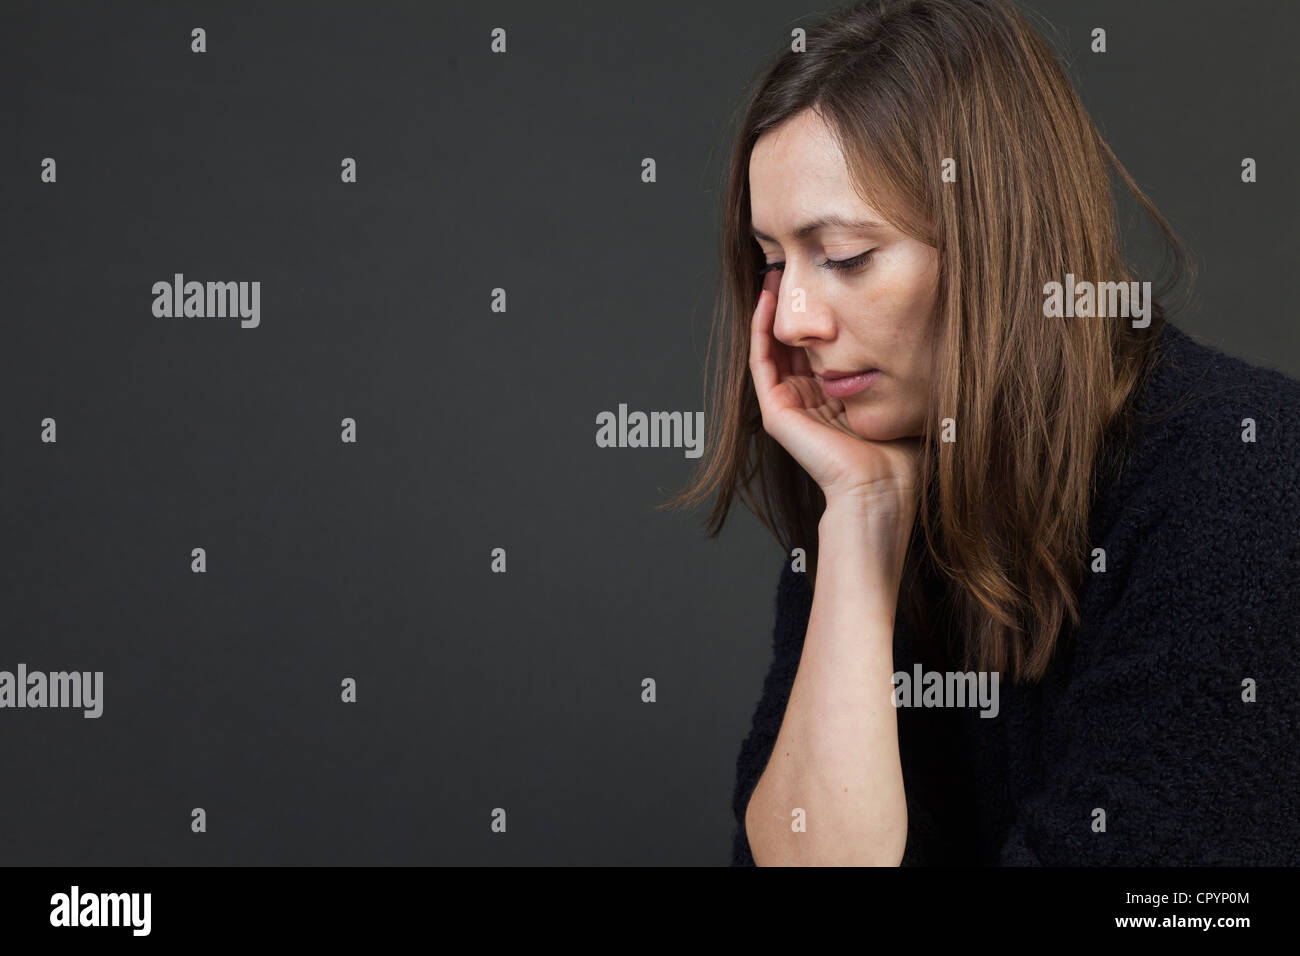 Woman, sad, depressions, worries Stock Photo